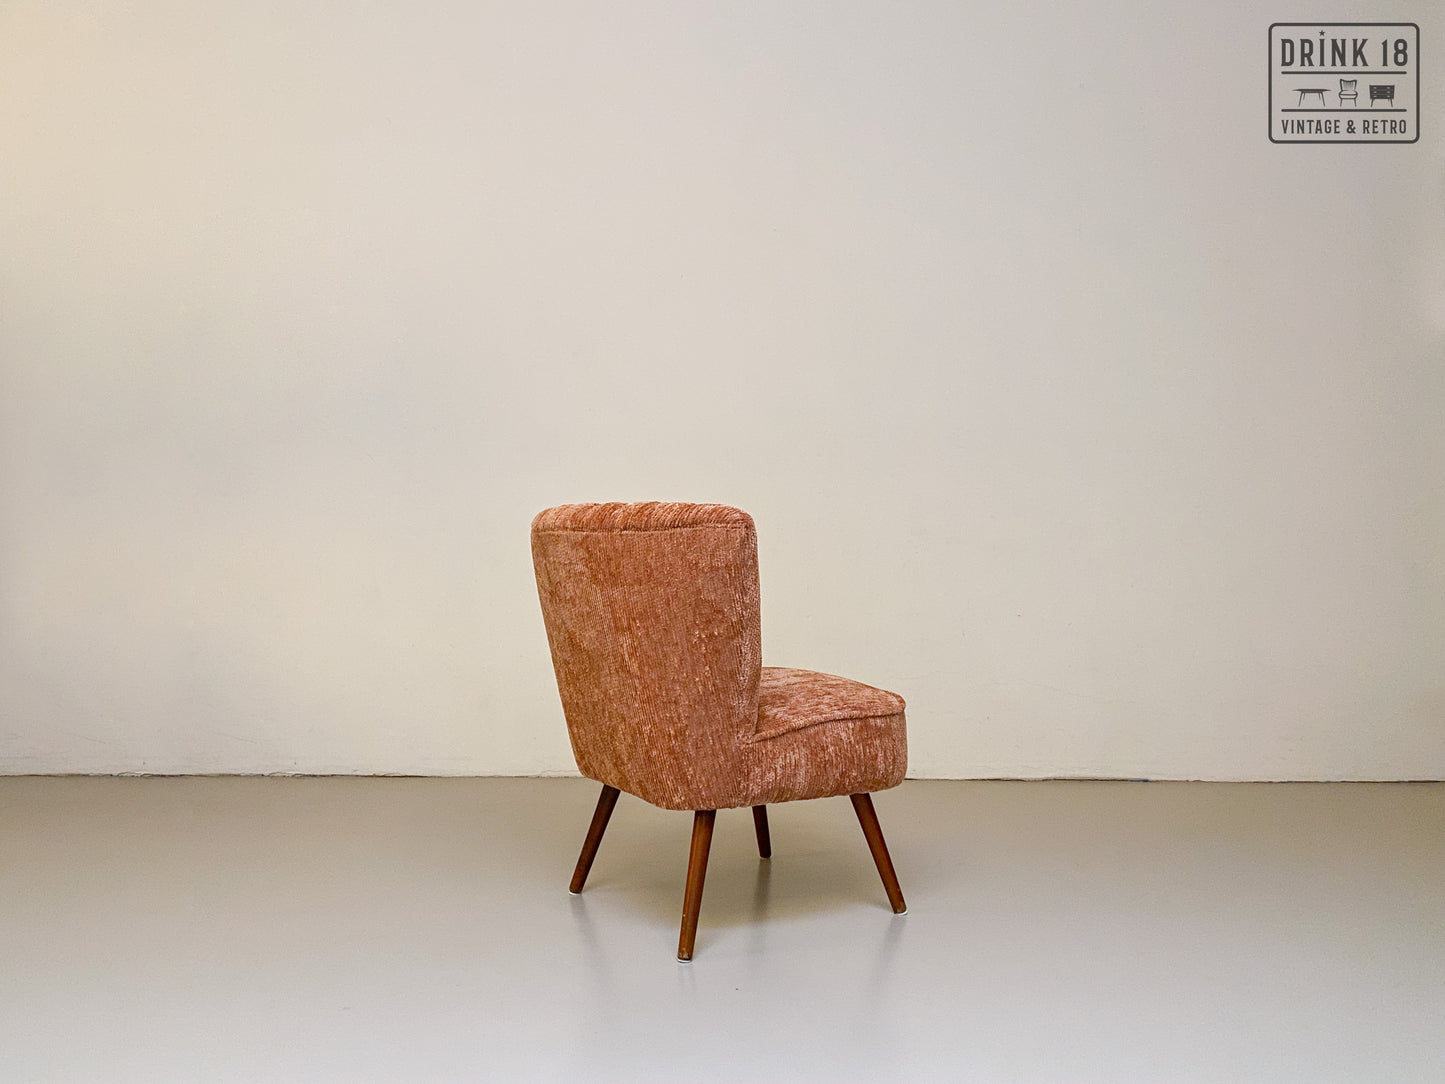 Gereserveerd- Vintage - Expo 58 / Cocktail chair #1